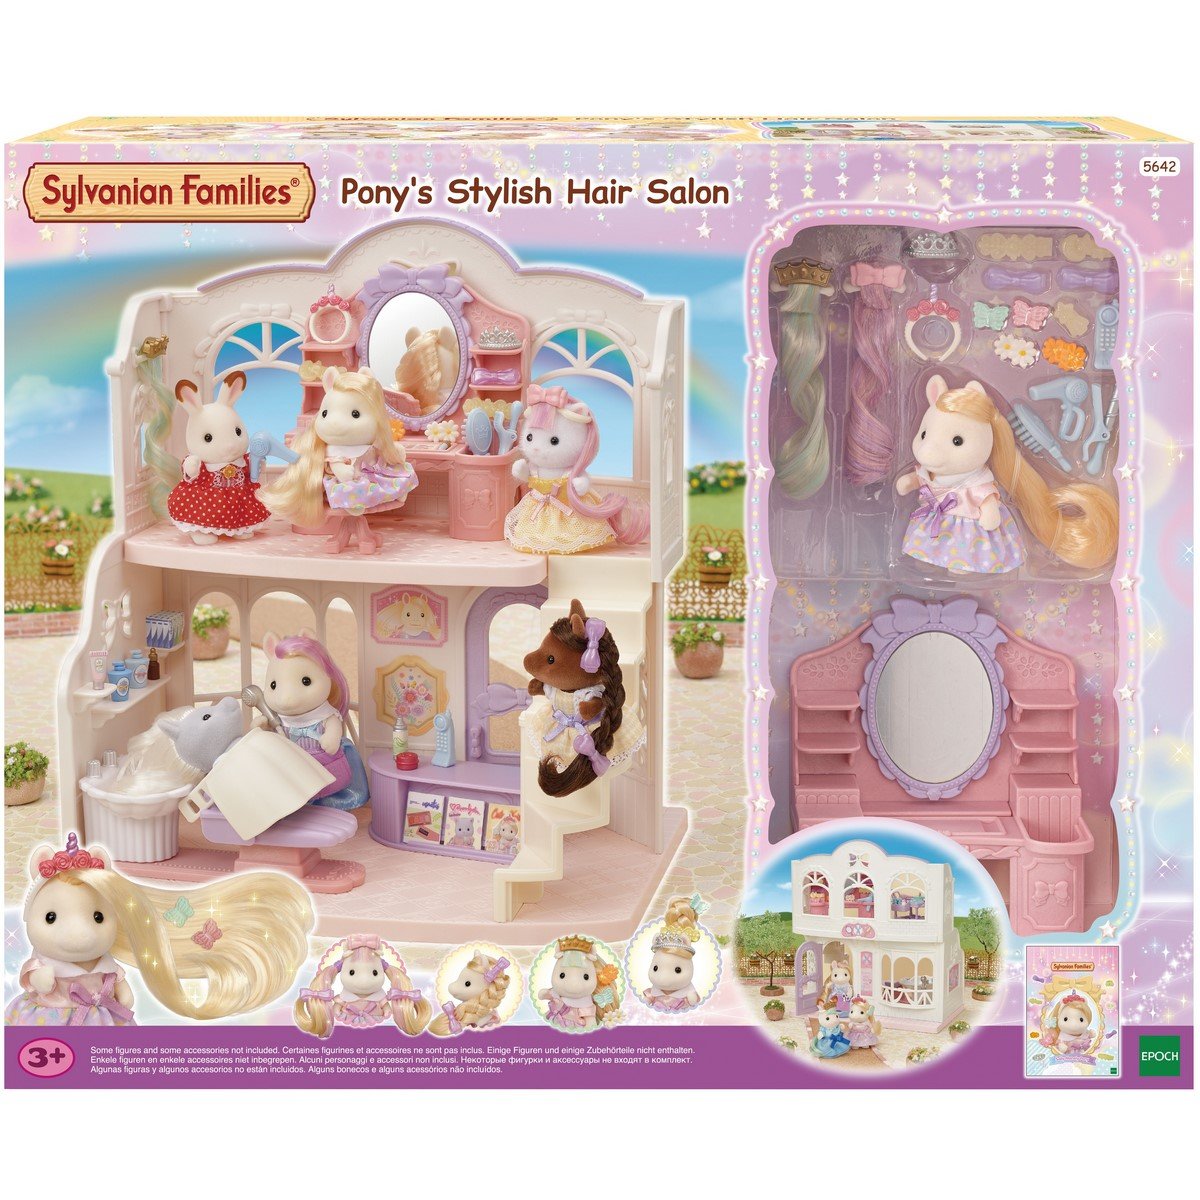 Le Salon de coiffure des poneys - Sylvanian Families 5642 - La